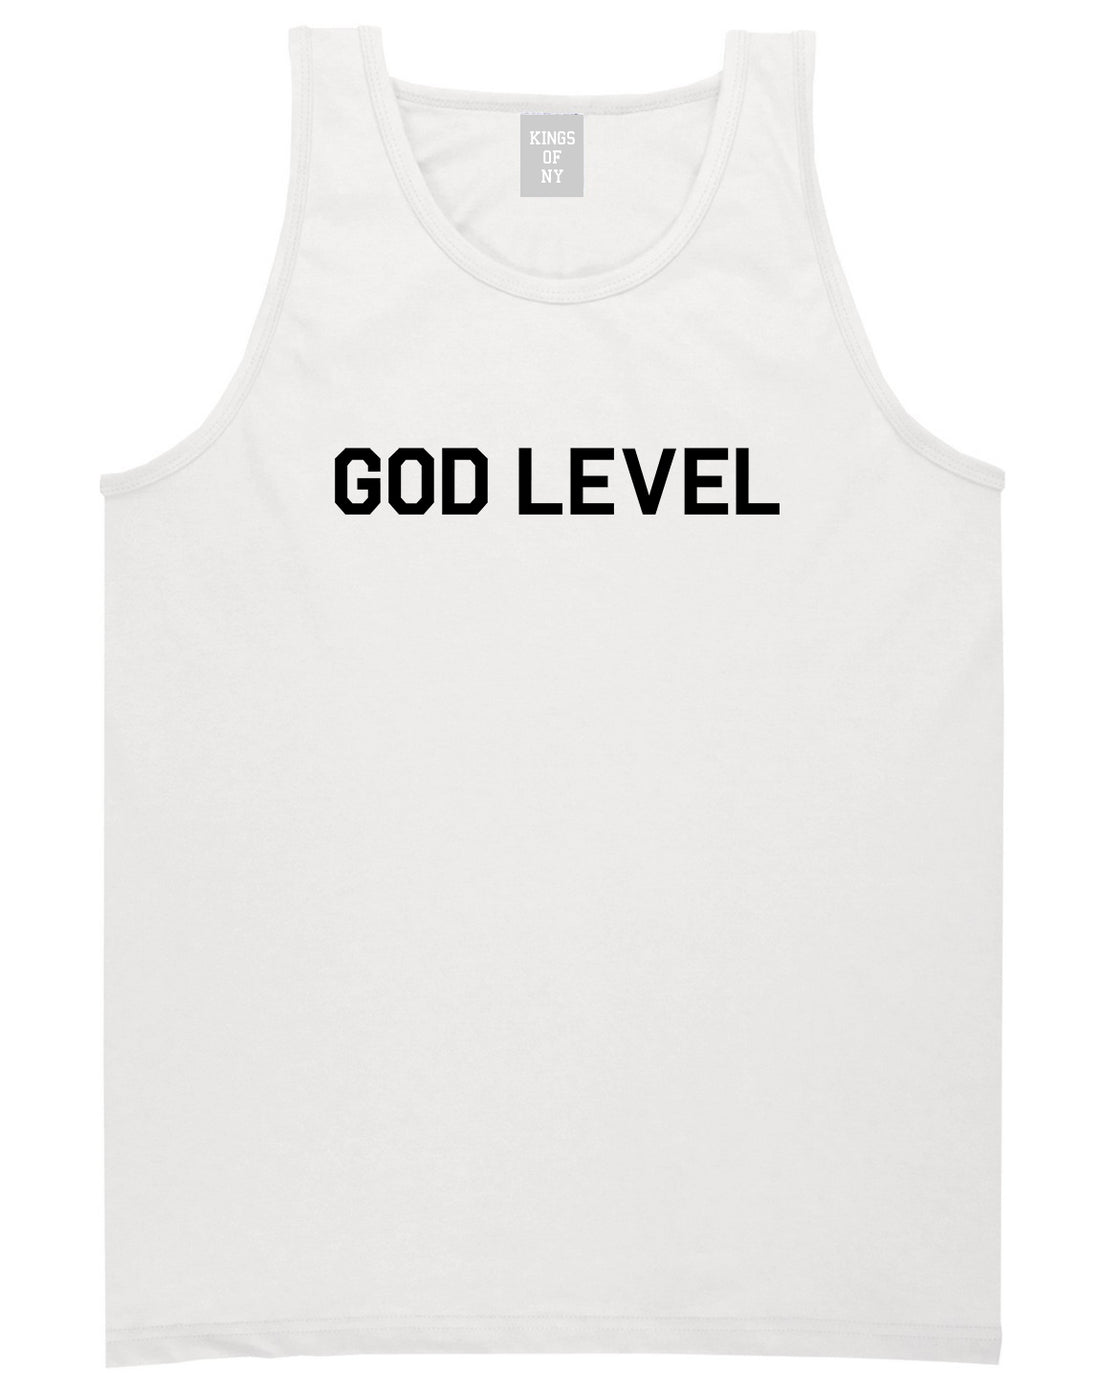 God Level Mens Tank Top Shirt White by Kings Of NY